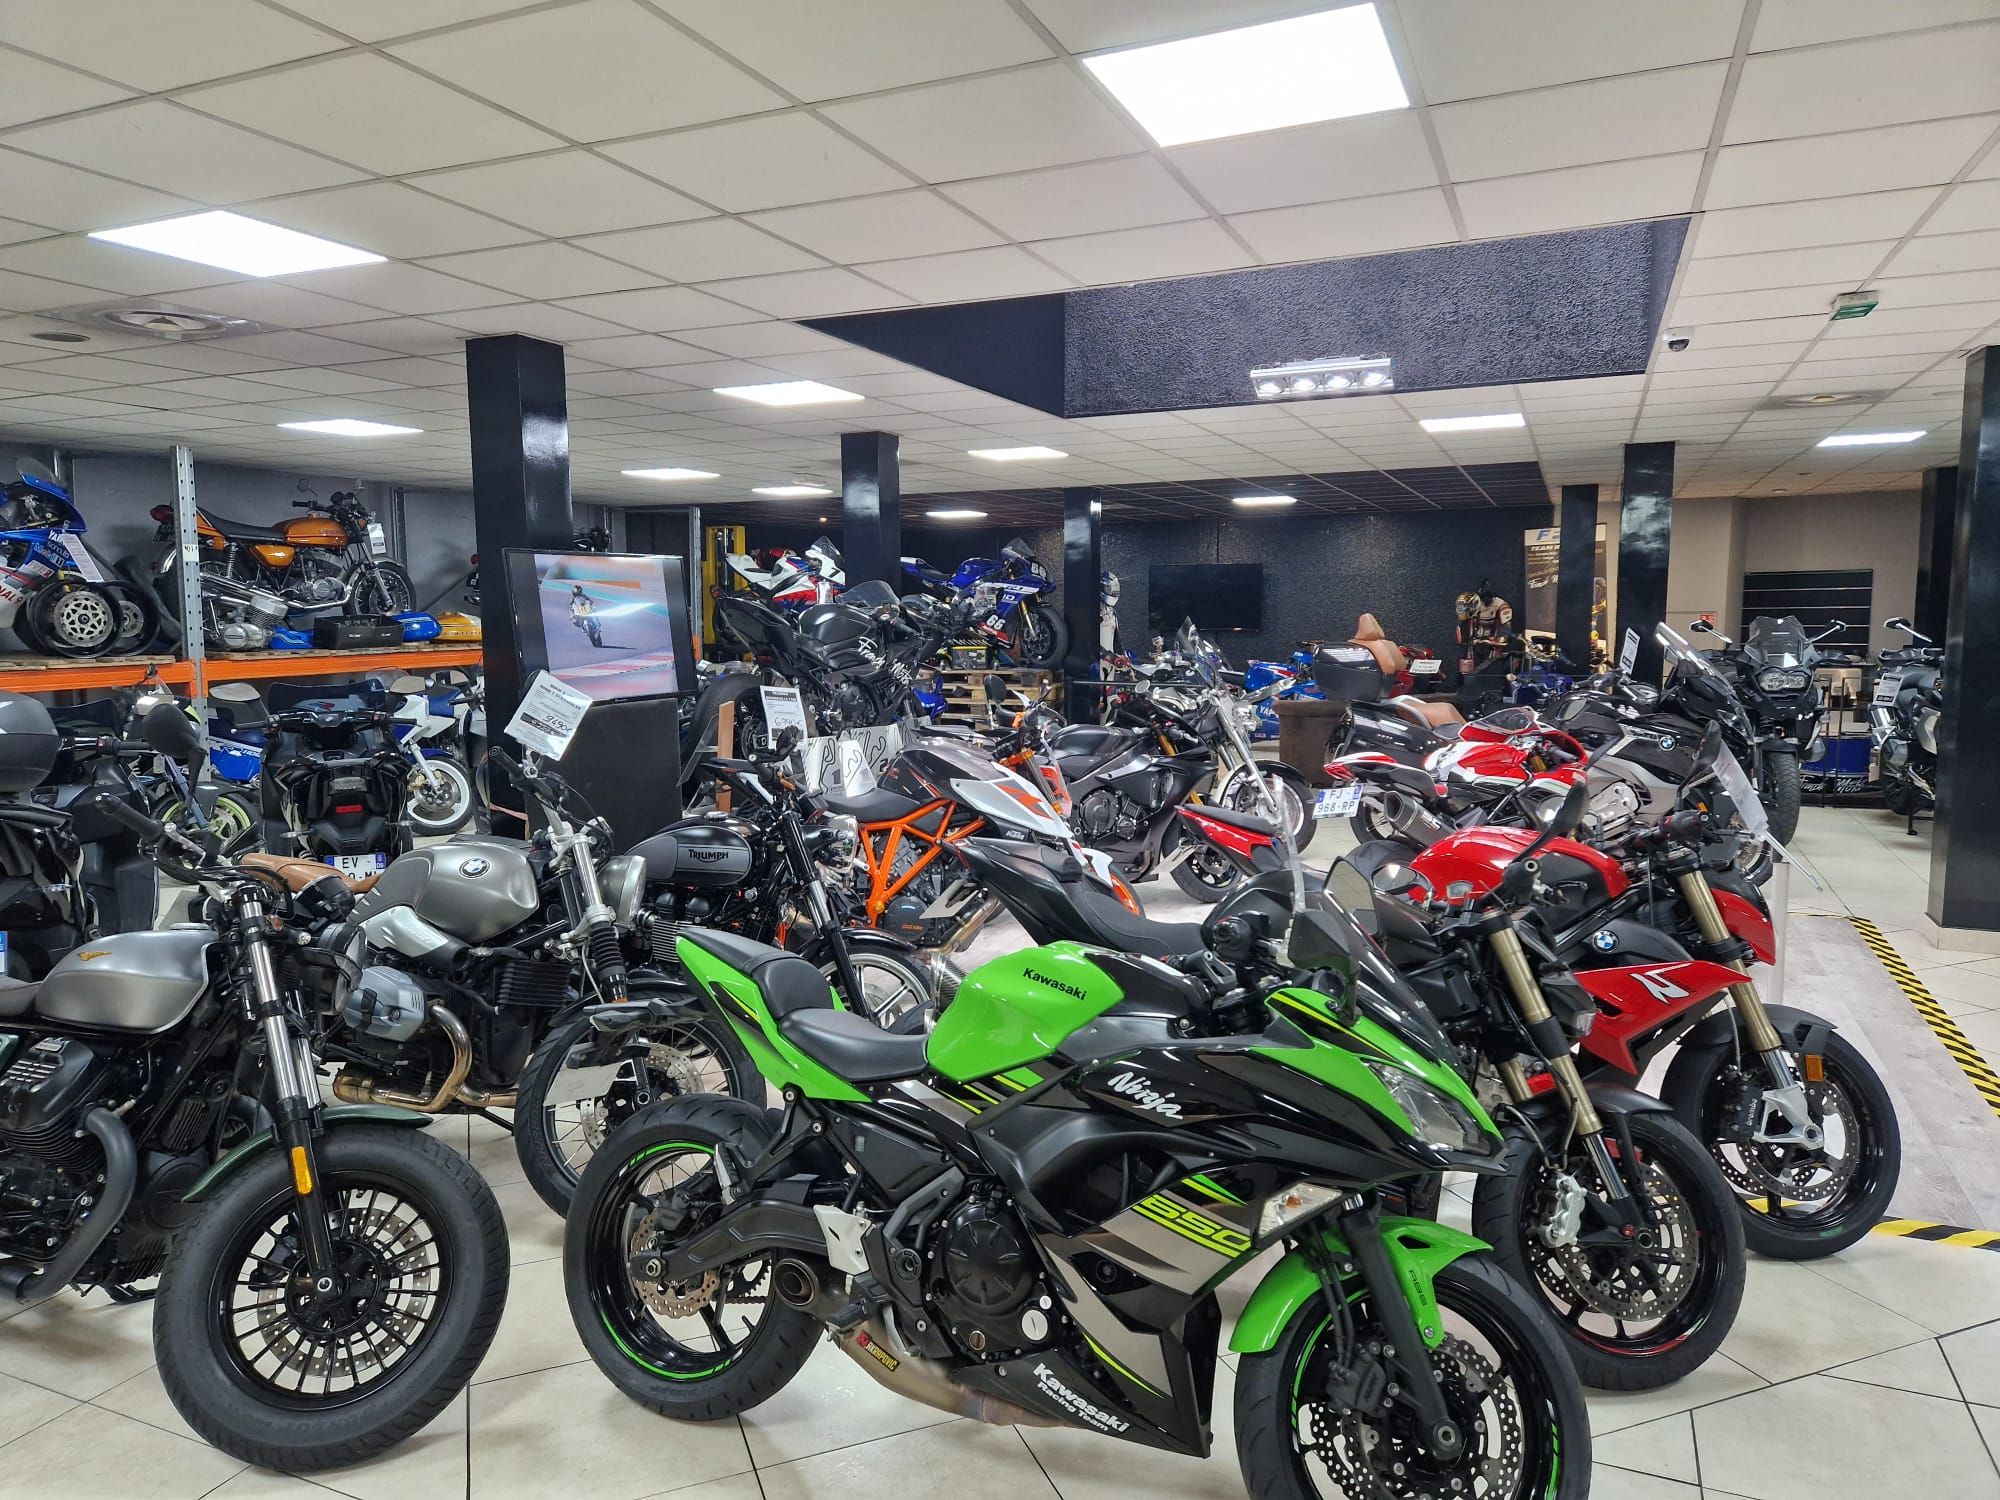 A vendre FDC Magasin vente de motos sur Nice